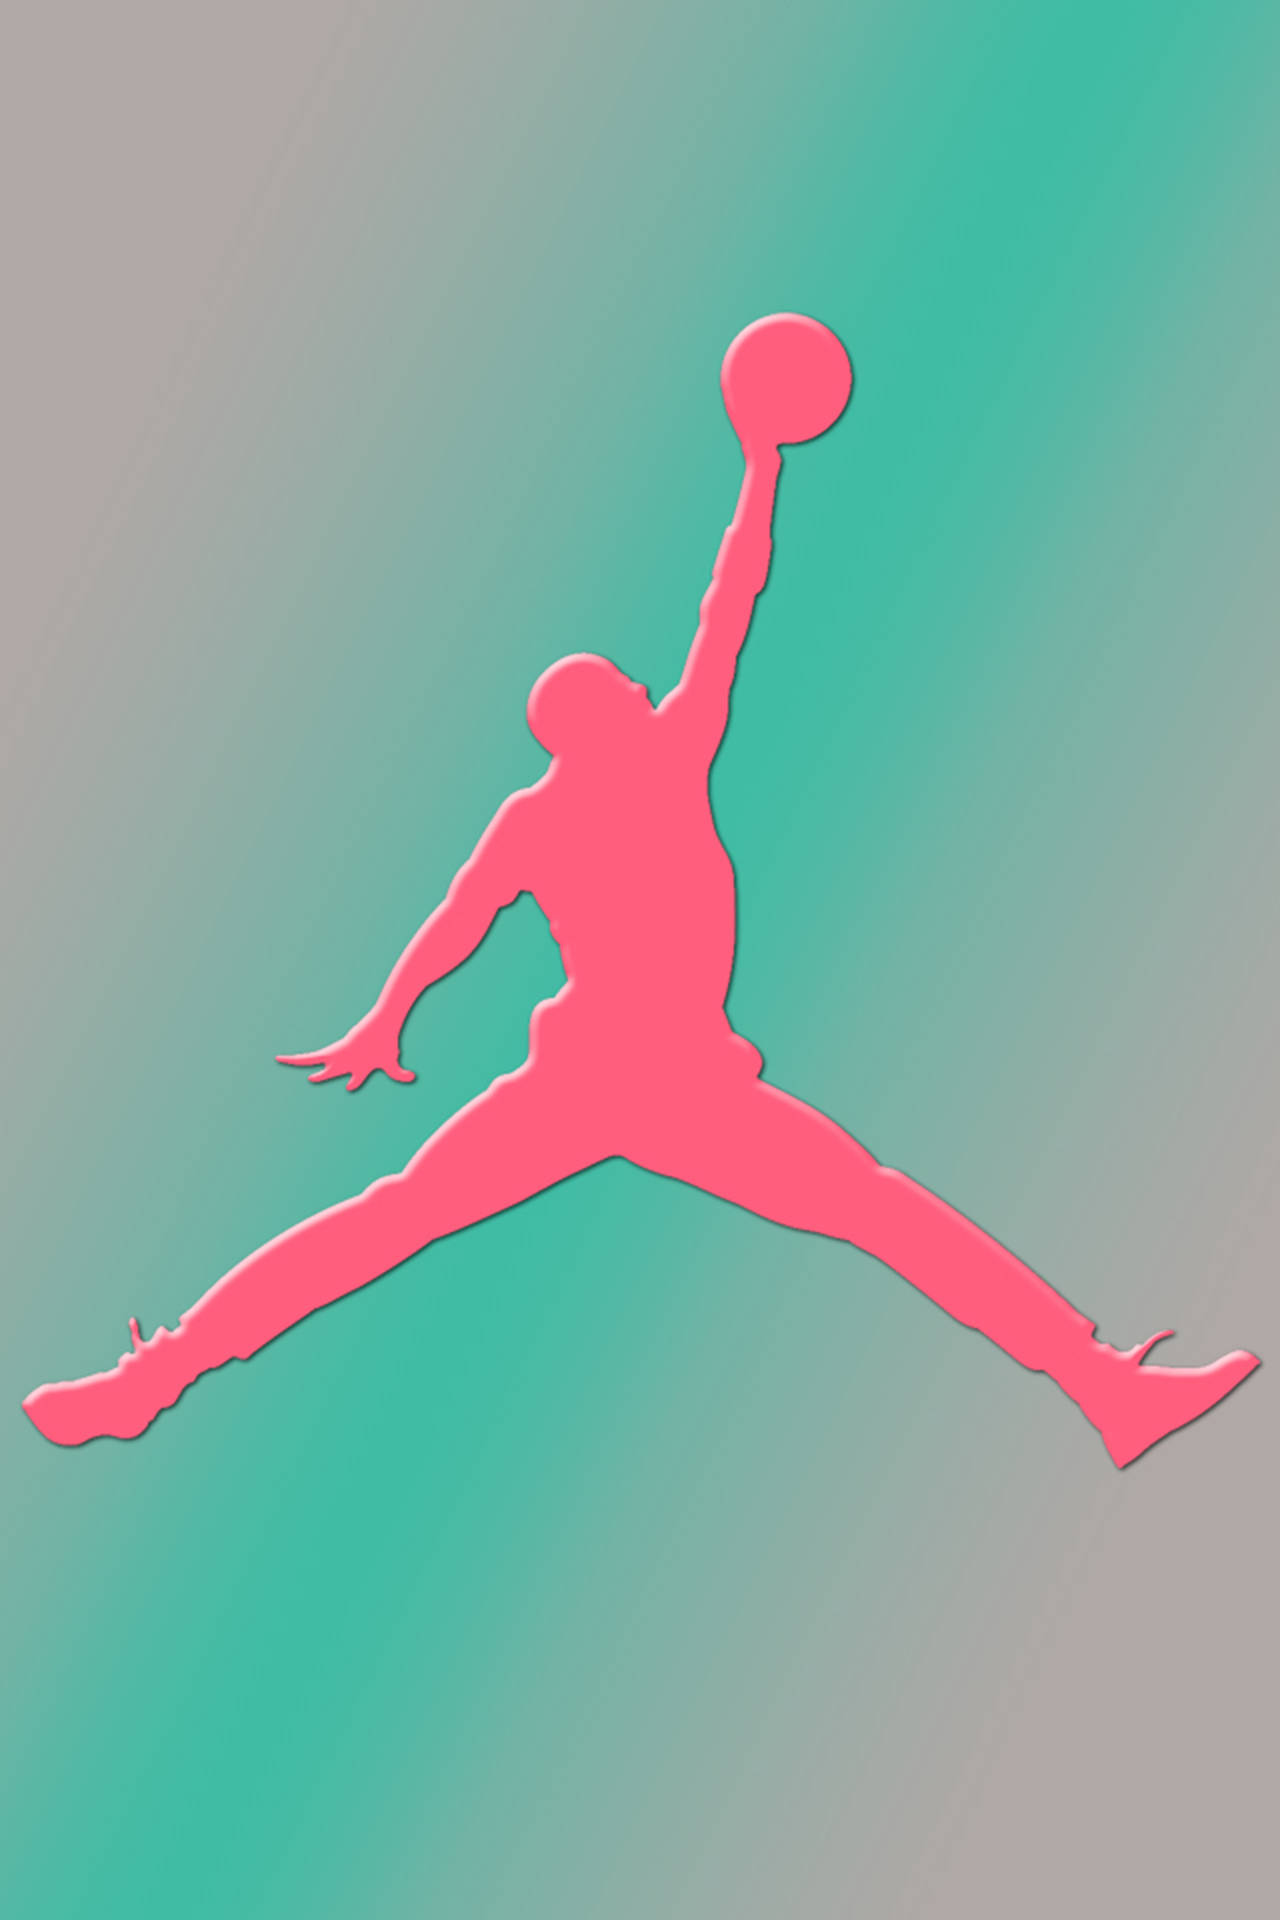 Air Jordan 2560X3840 Wallpaper and Background Image